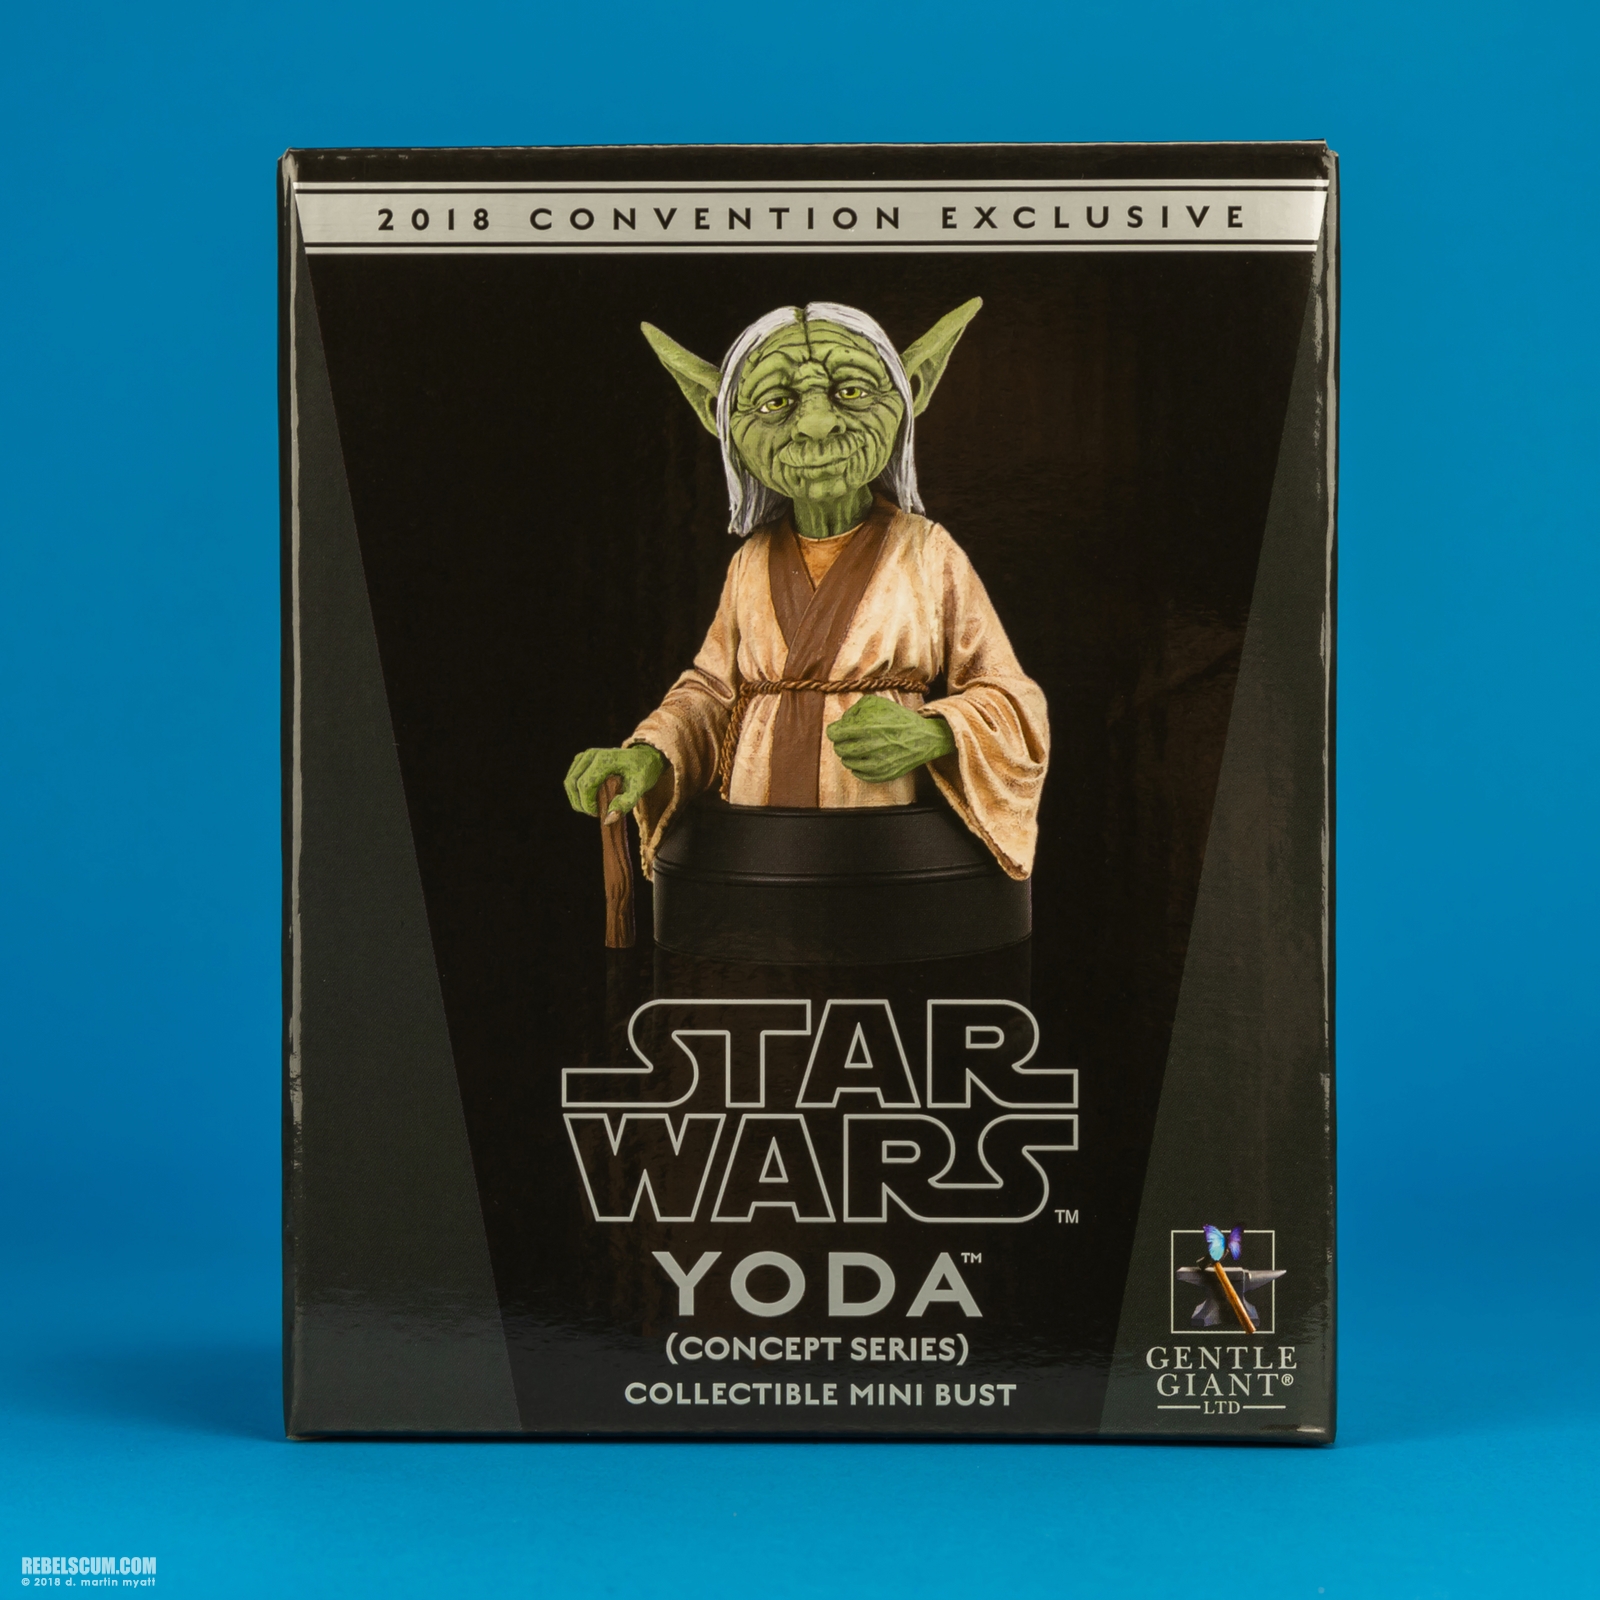 Yoda-Concept-Series-Mini-Bust-Gentle-Giant-Star-Wars-009.jpg